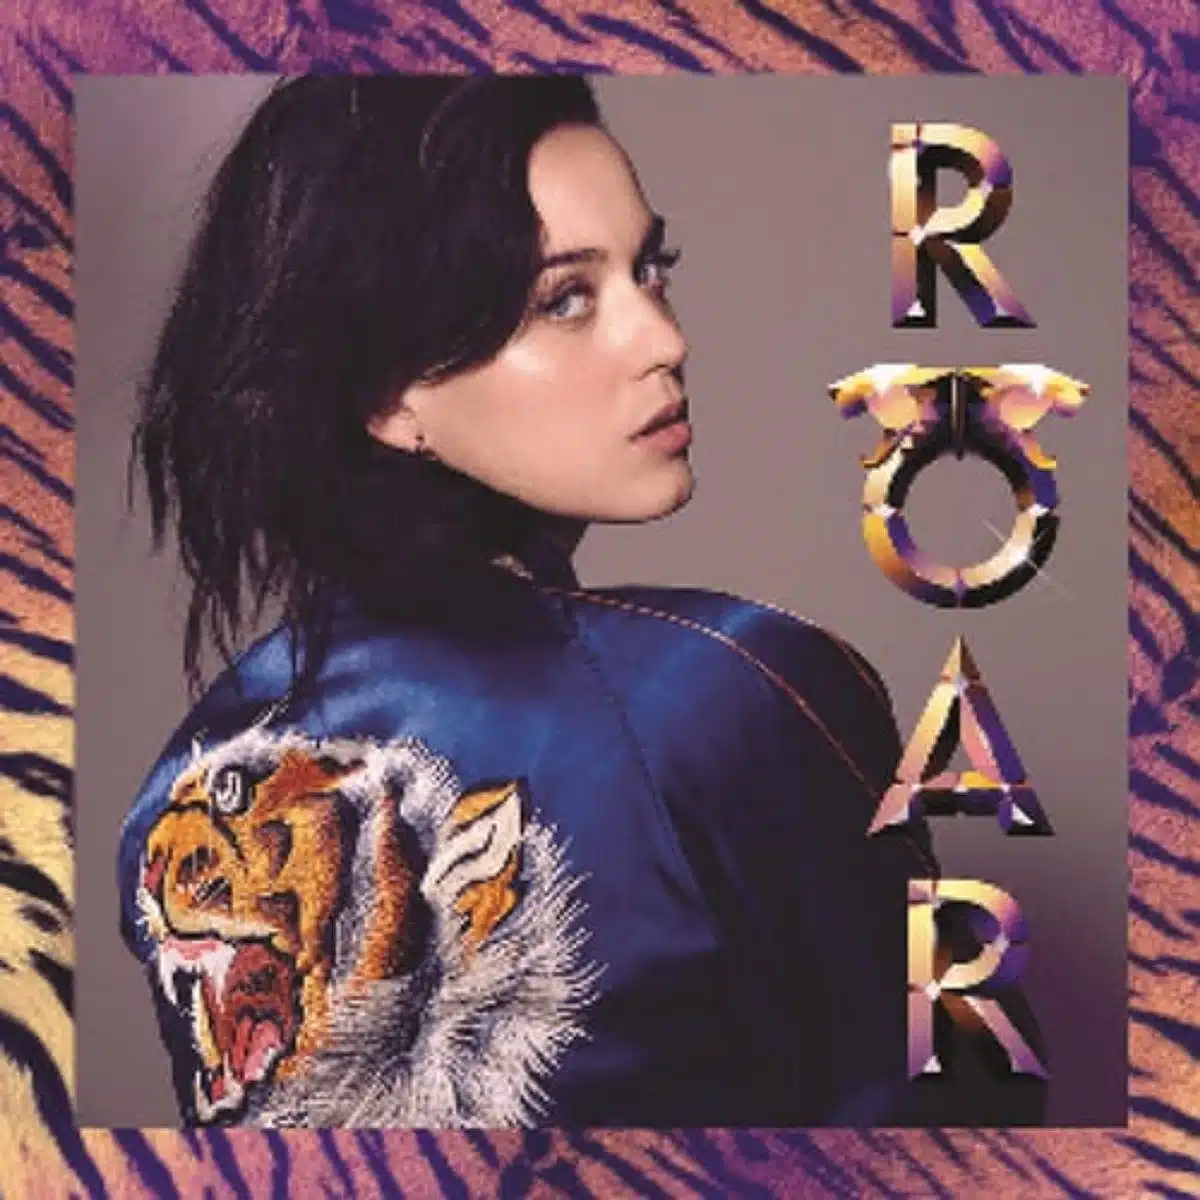 DOWNLOAD: Katy Perry – “Roar” (Video & Audio) Mp3